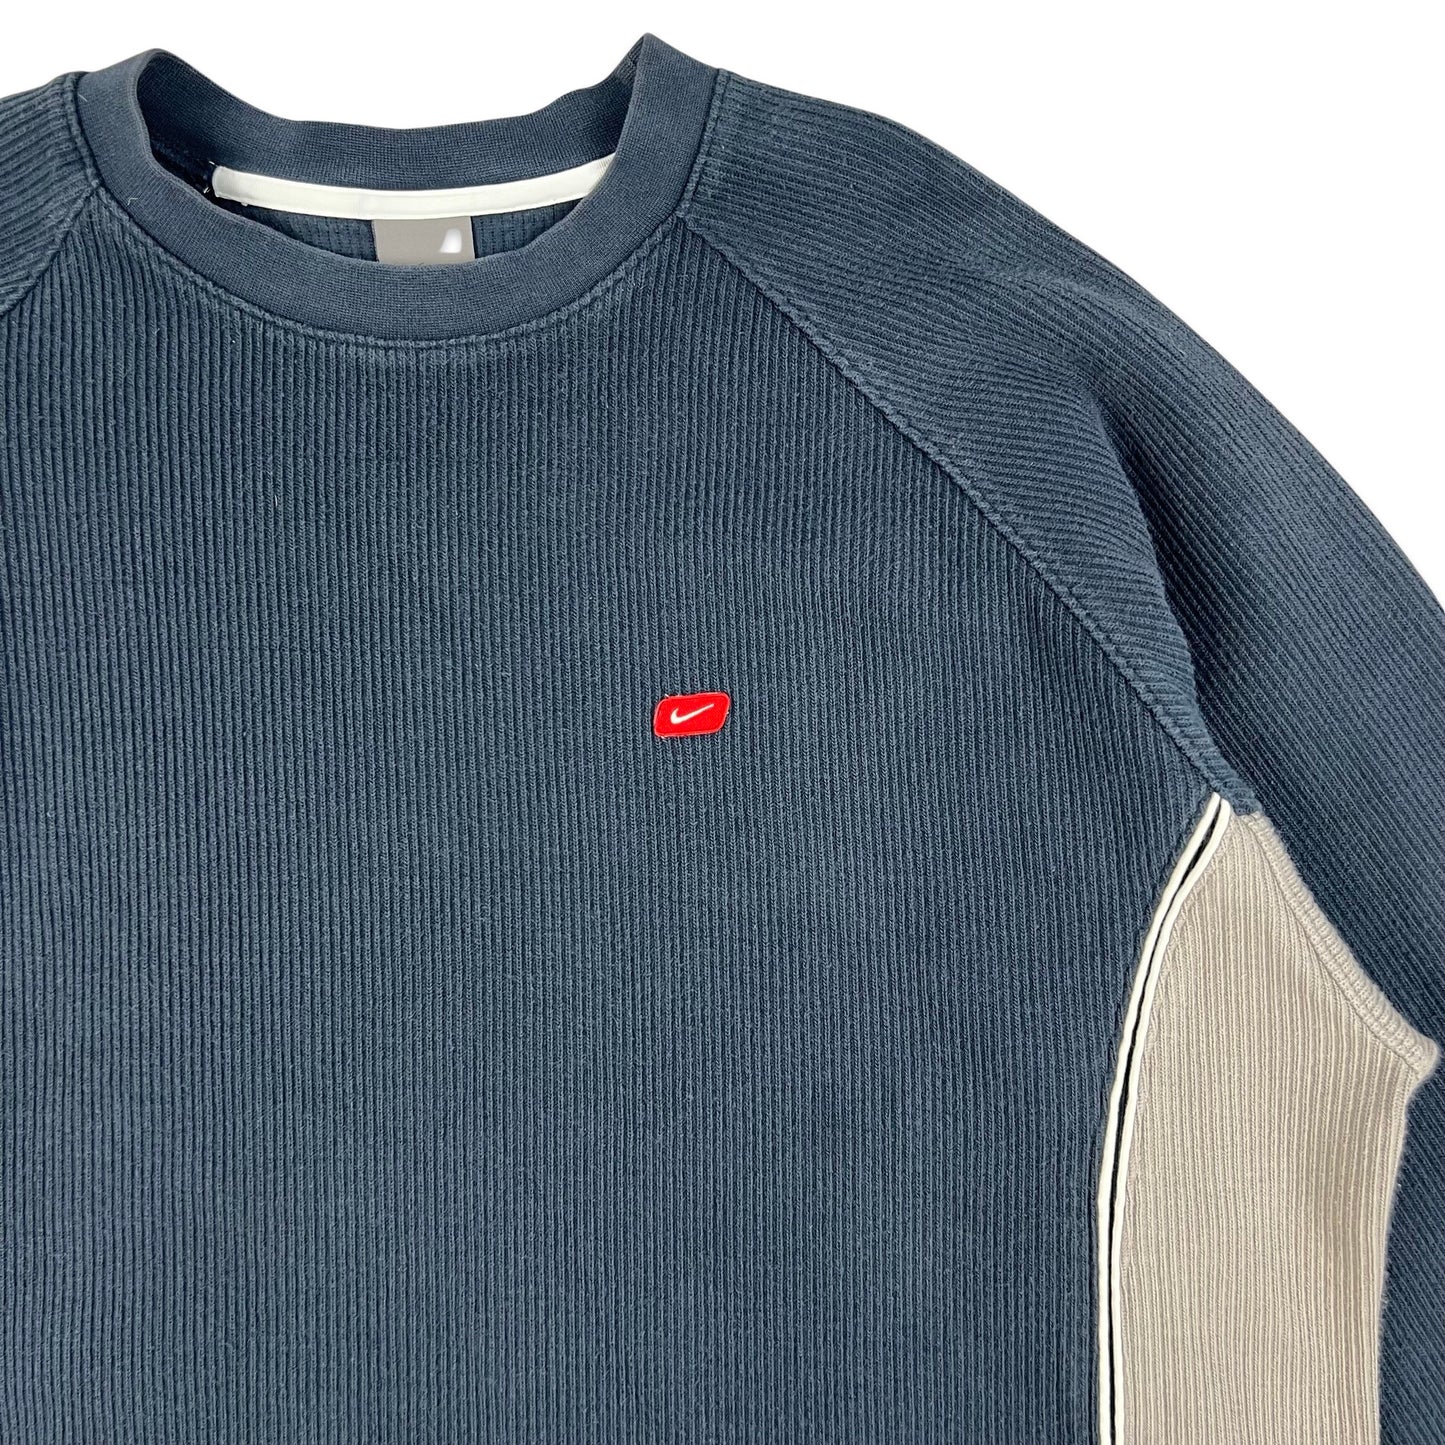 Vintage 00s Navy Grey Nike Sweatshirt L XL 2XL